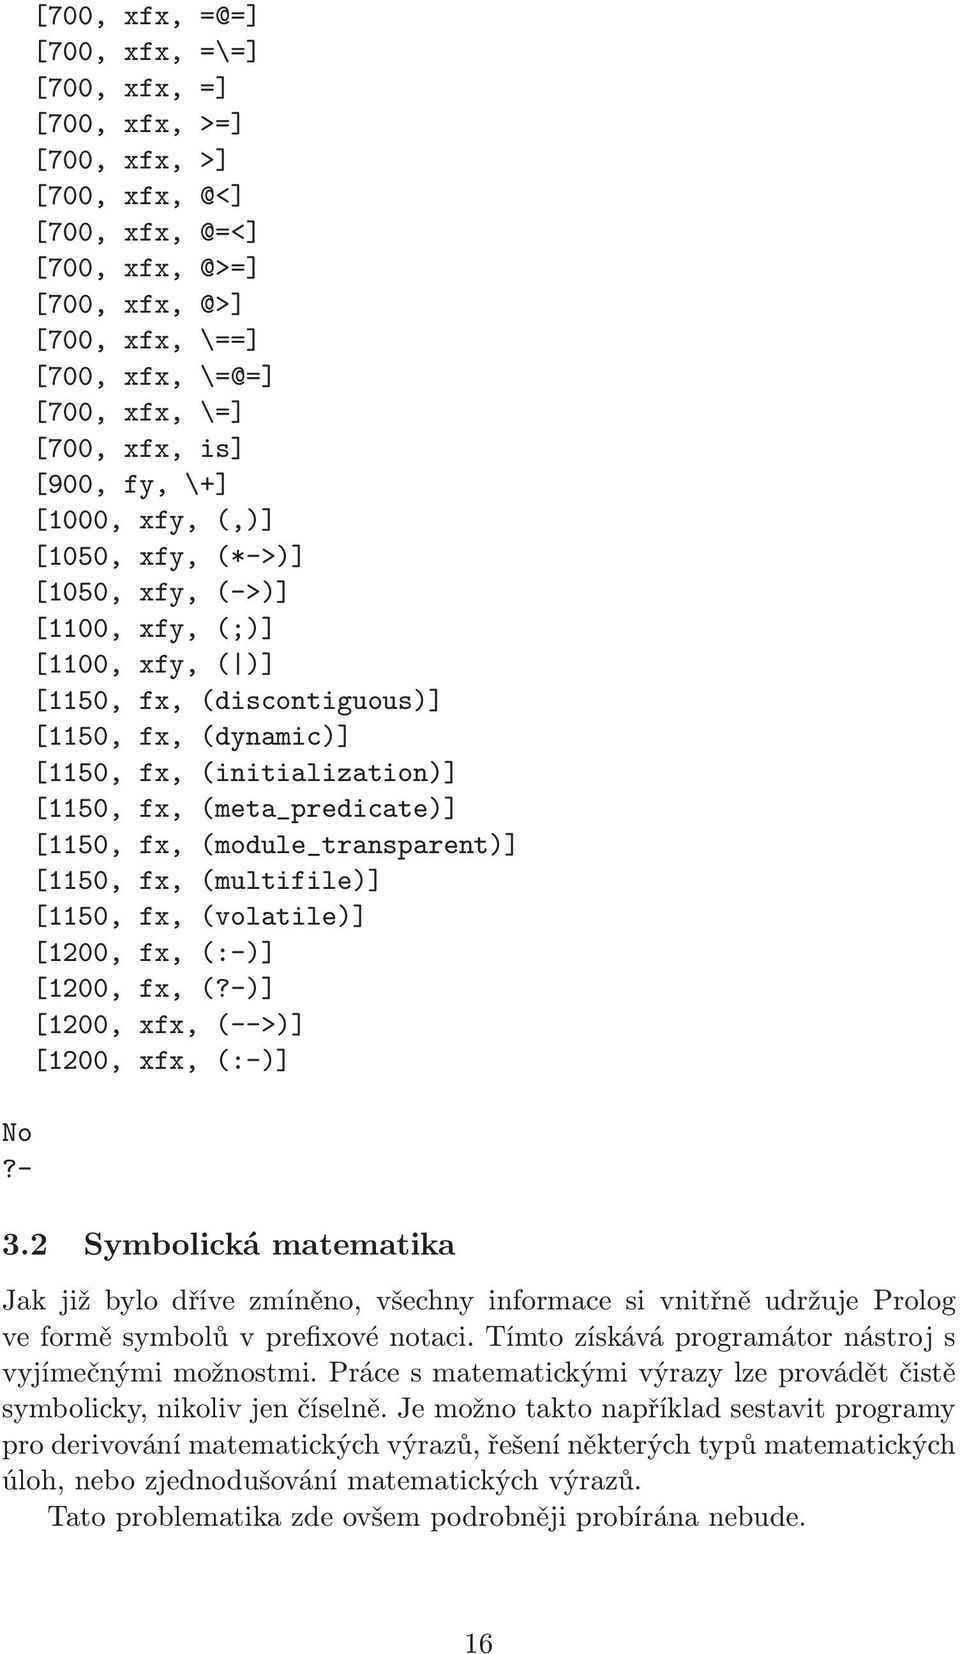 fx, (meta_predicate)] [1150, fx, (module_transparent)] [1150, fx, (multifile)] [1150, fx, (volatile)] [1200, fx, (:-)] [1200, fx, (?-)] [1200, xfx, (-->)] [1200, xfx, (:-)] 3.